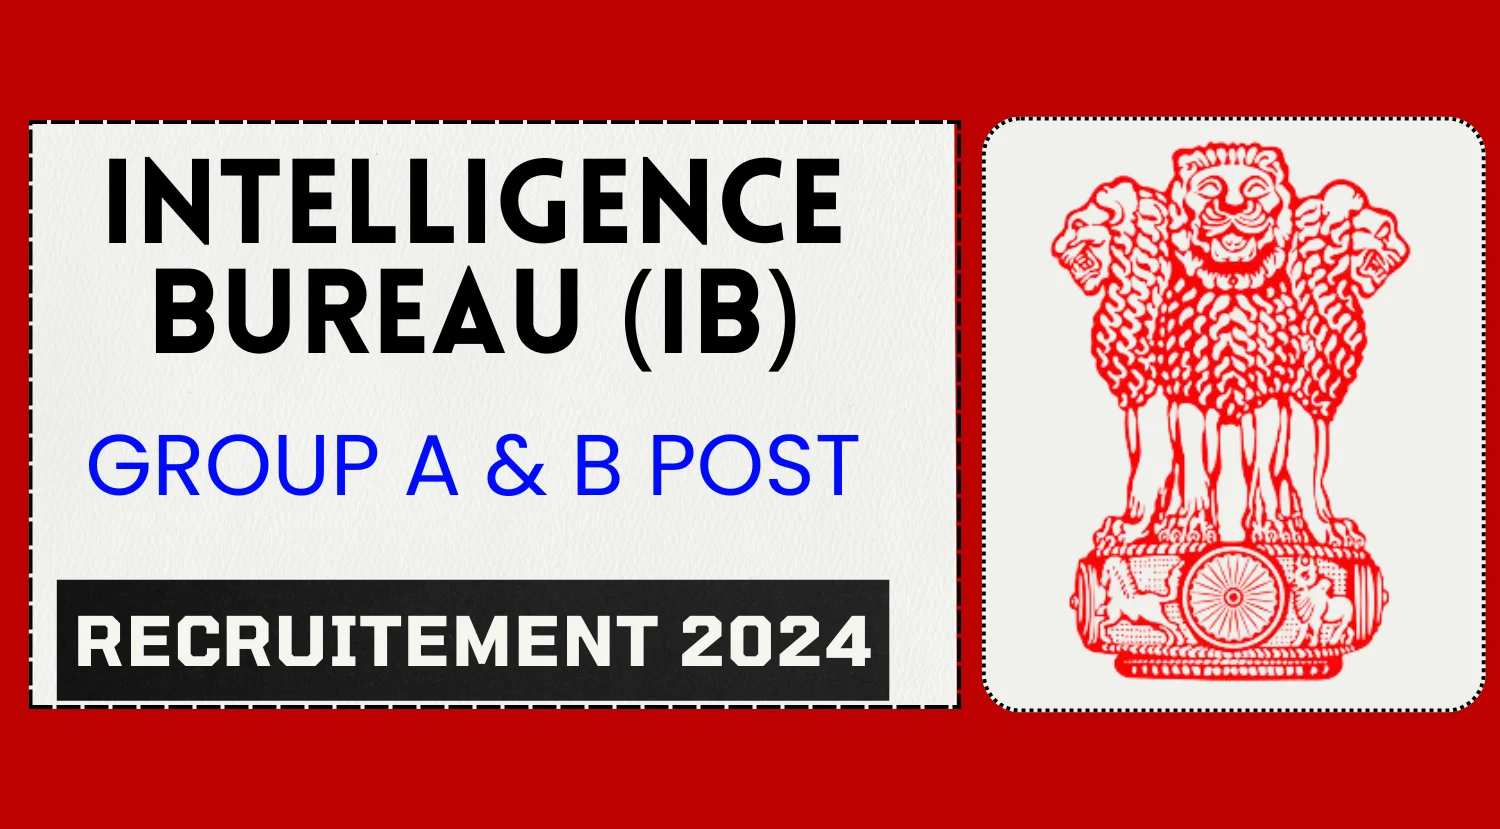 Intelligence Bureau IB Recruitment 2024 for Group A B Post